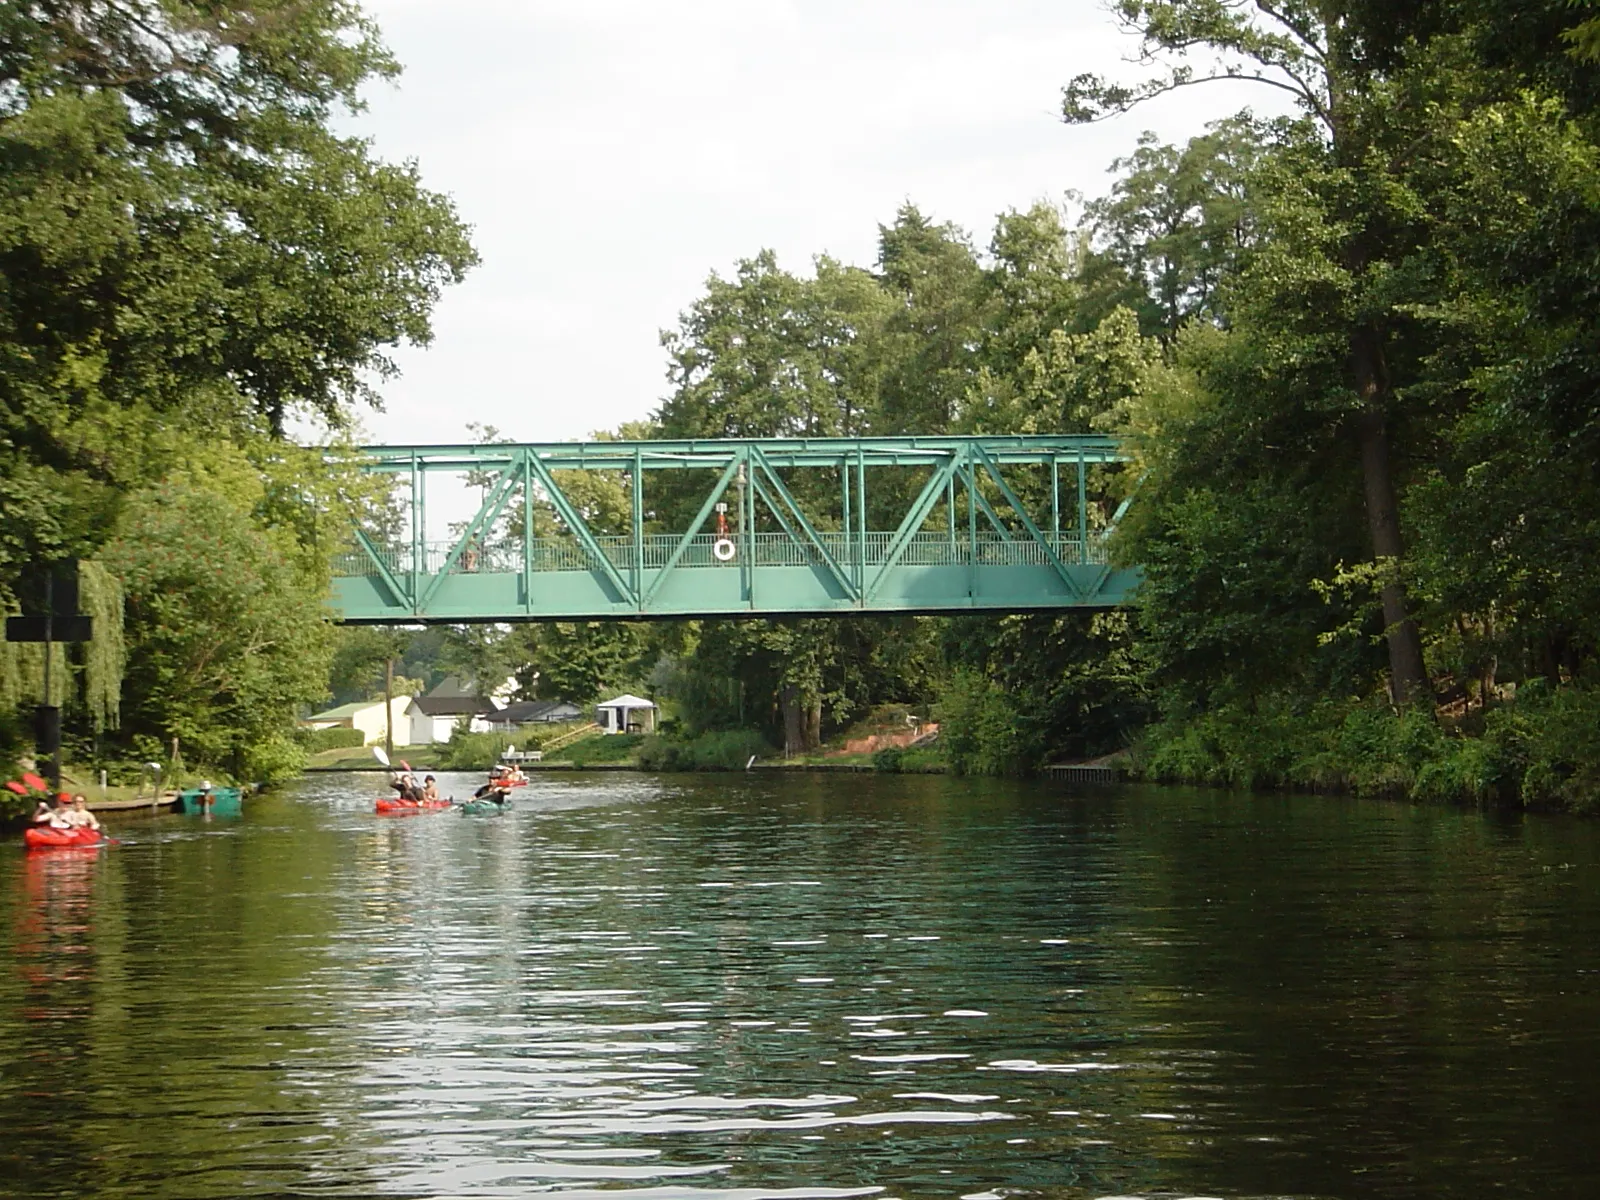 Photo showing: Triglawbrücke (“Triglav bridge”) across river Spree in Rahnsdorf, Treptow-Köpenick, Berlin.